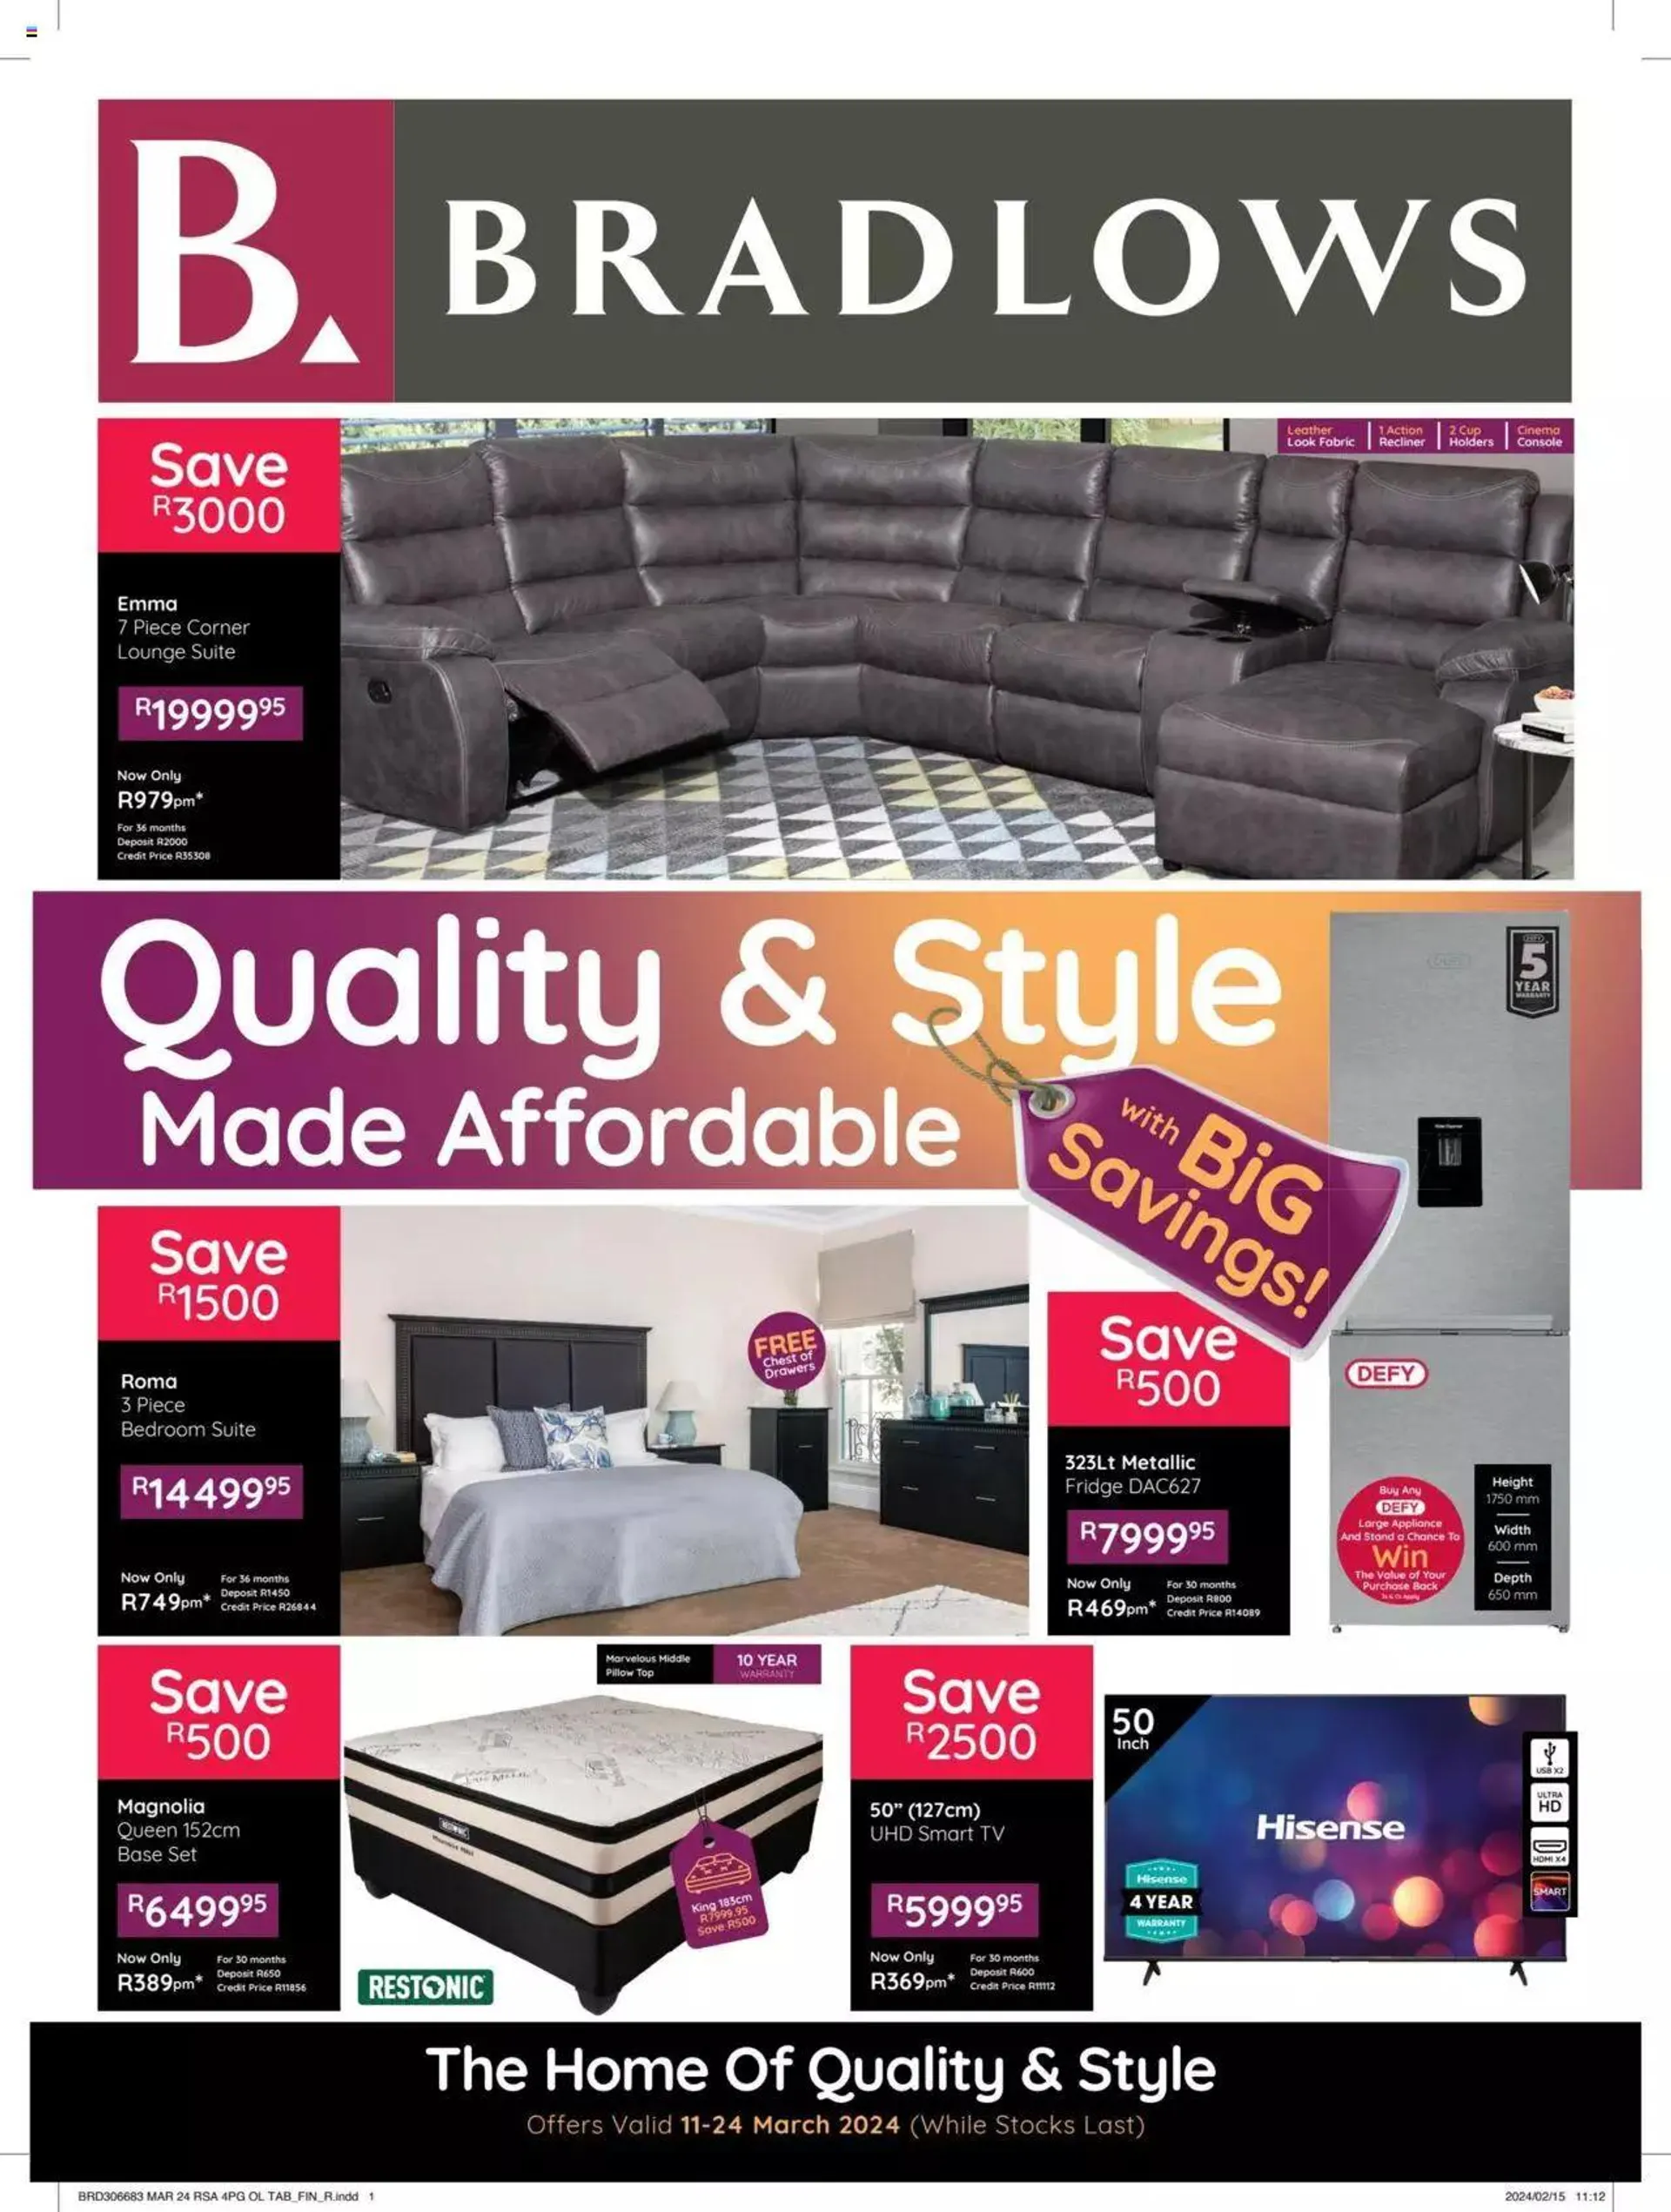 Bradlows Specials - 11 March 24 March 2024